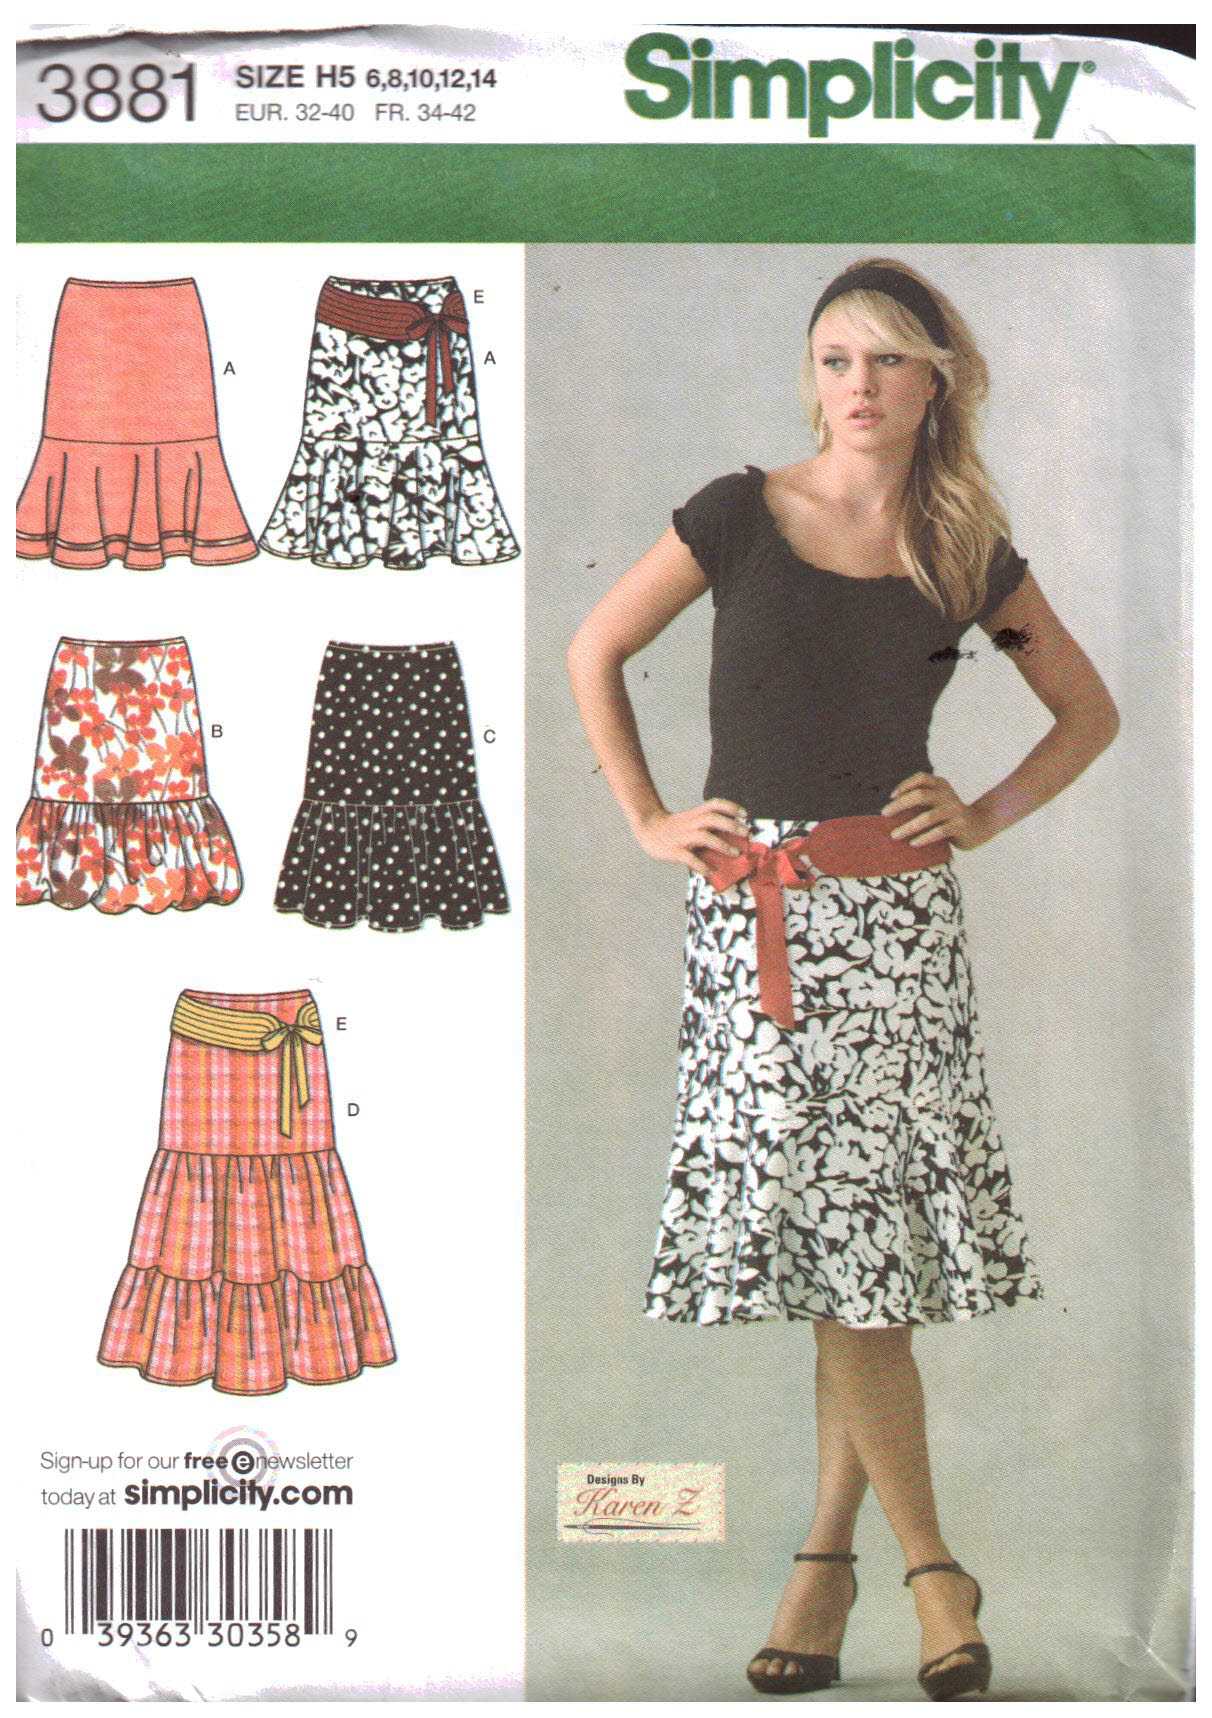 Simplicity 3881 Skirts Size: H5 6-8-10-12-14 Uncut Sewing Pattern